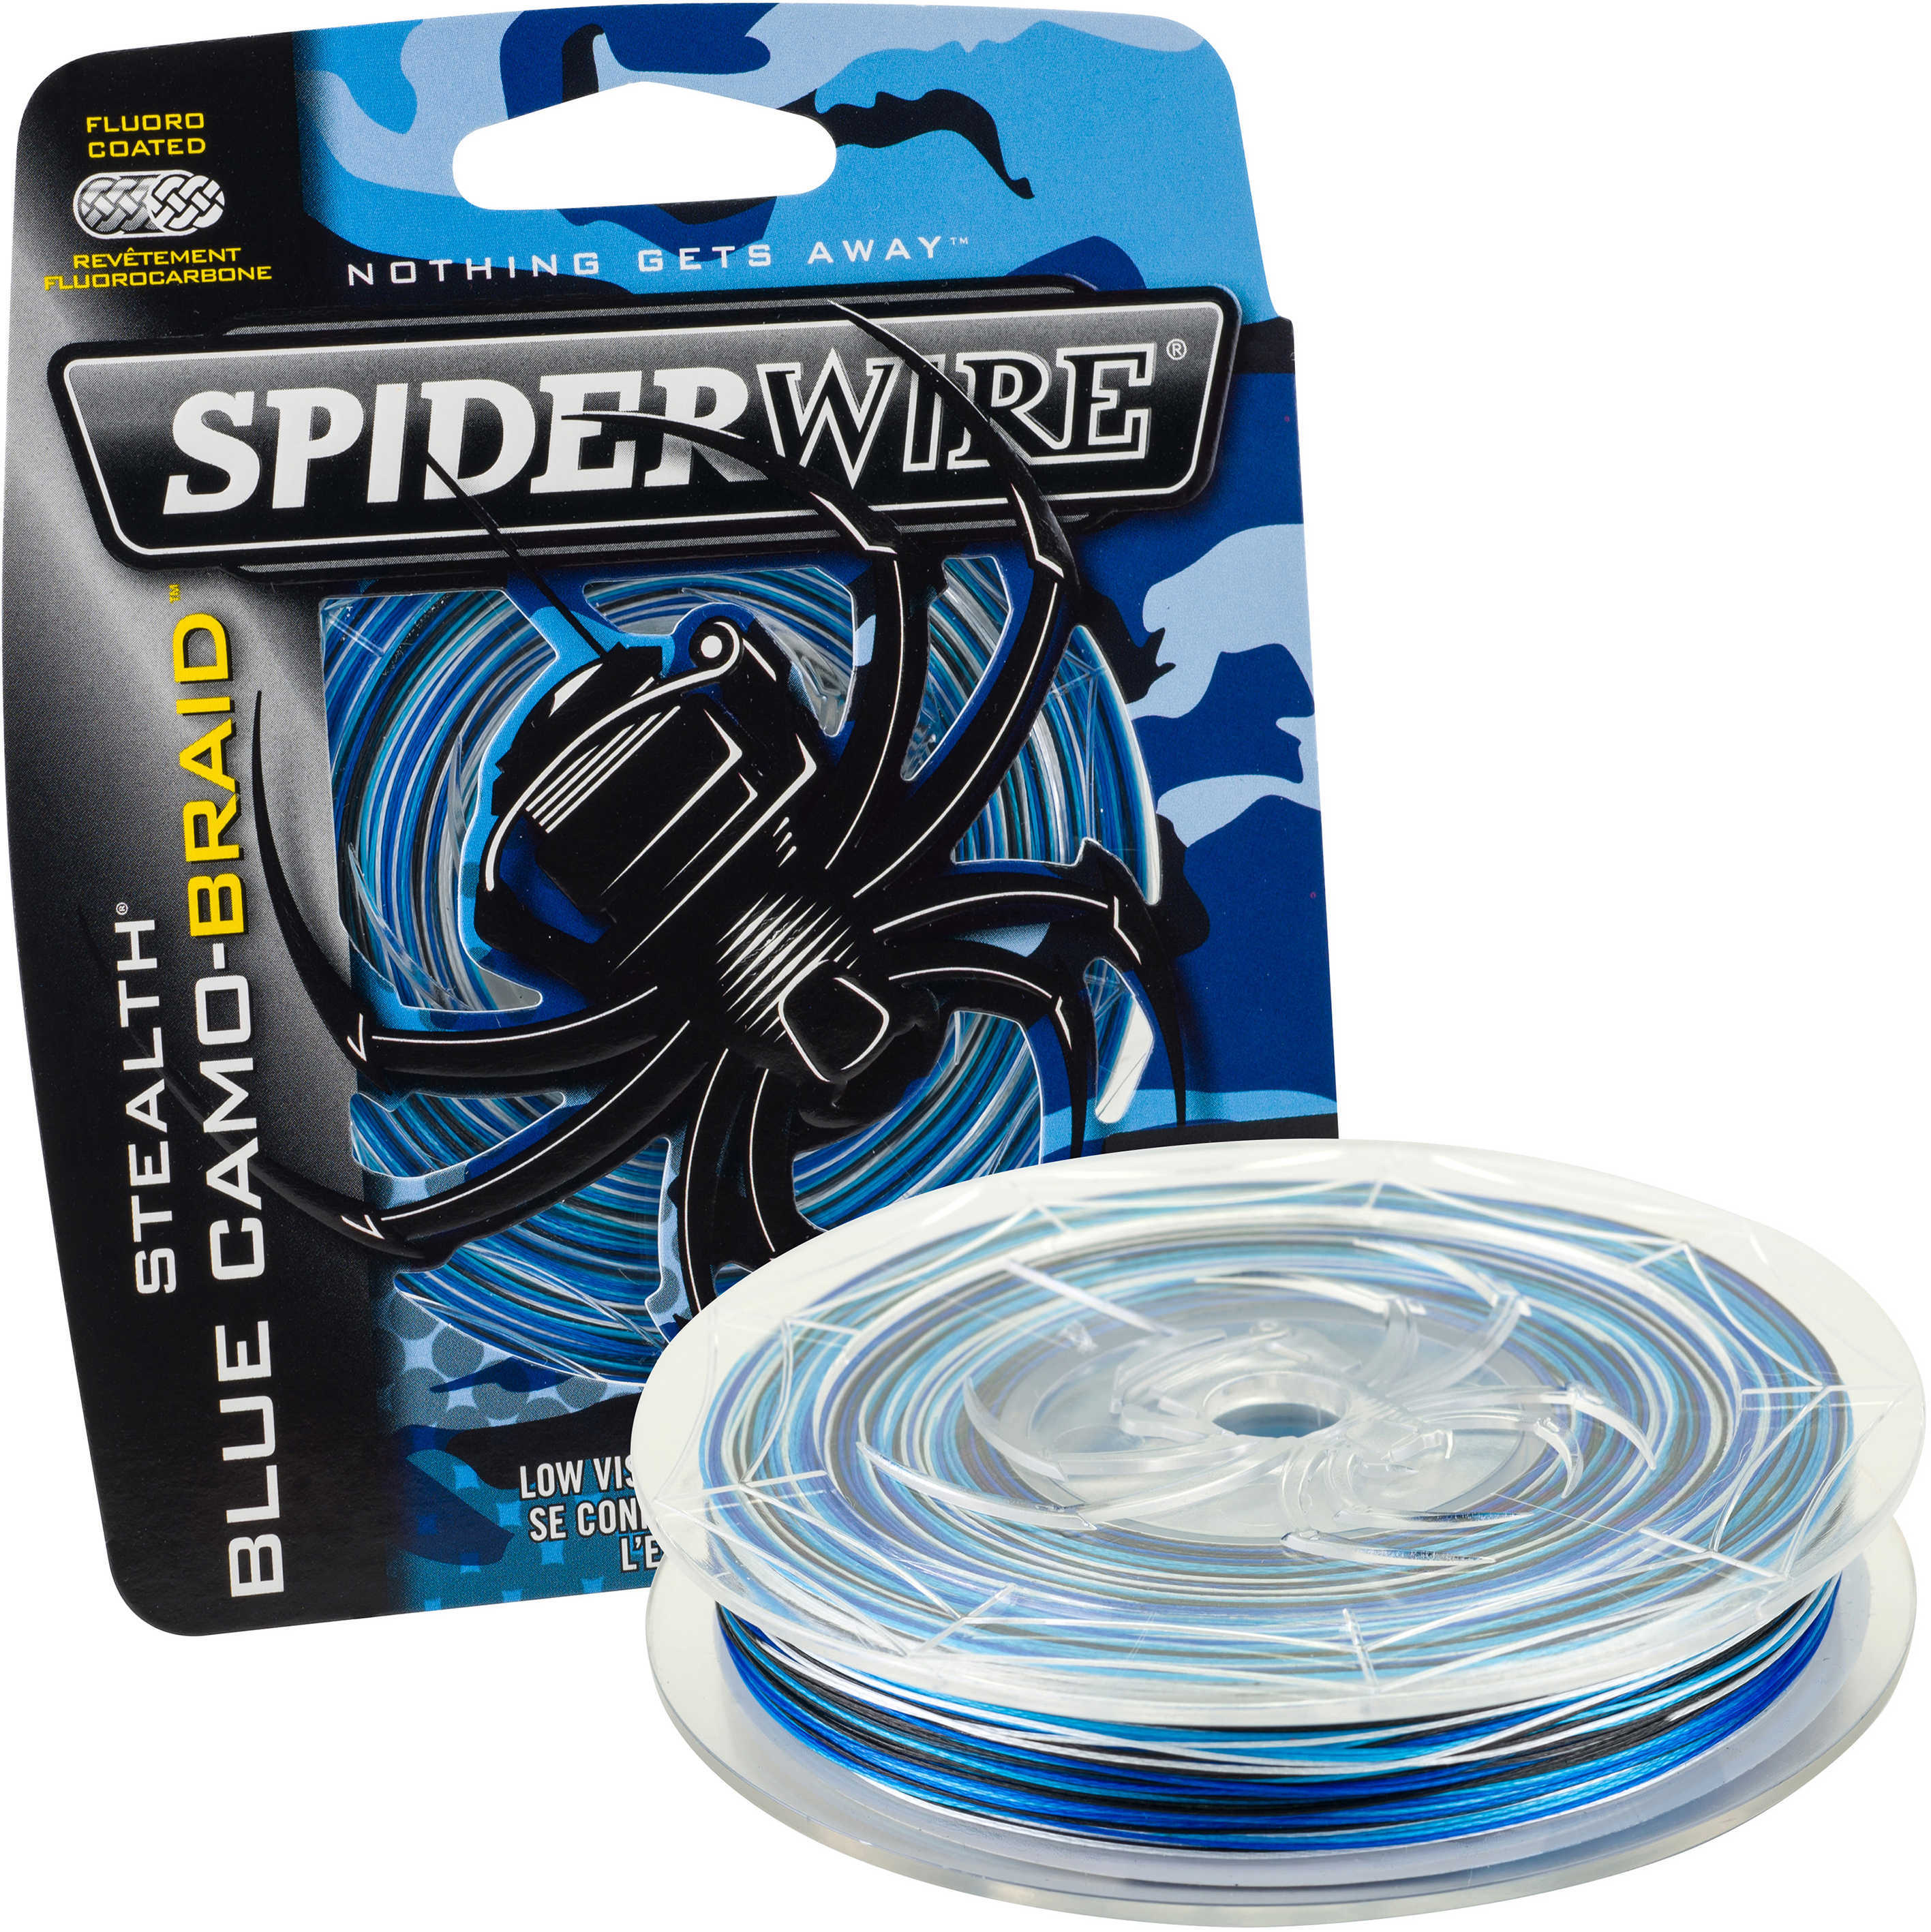 Spiderwire Stealth Braid 250 Yards , 100 lbs Strength, 0.020" Diameter, Blue Camo Md: 1370452